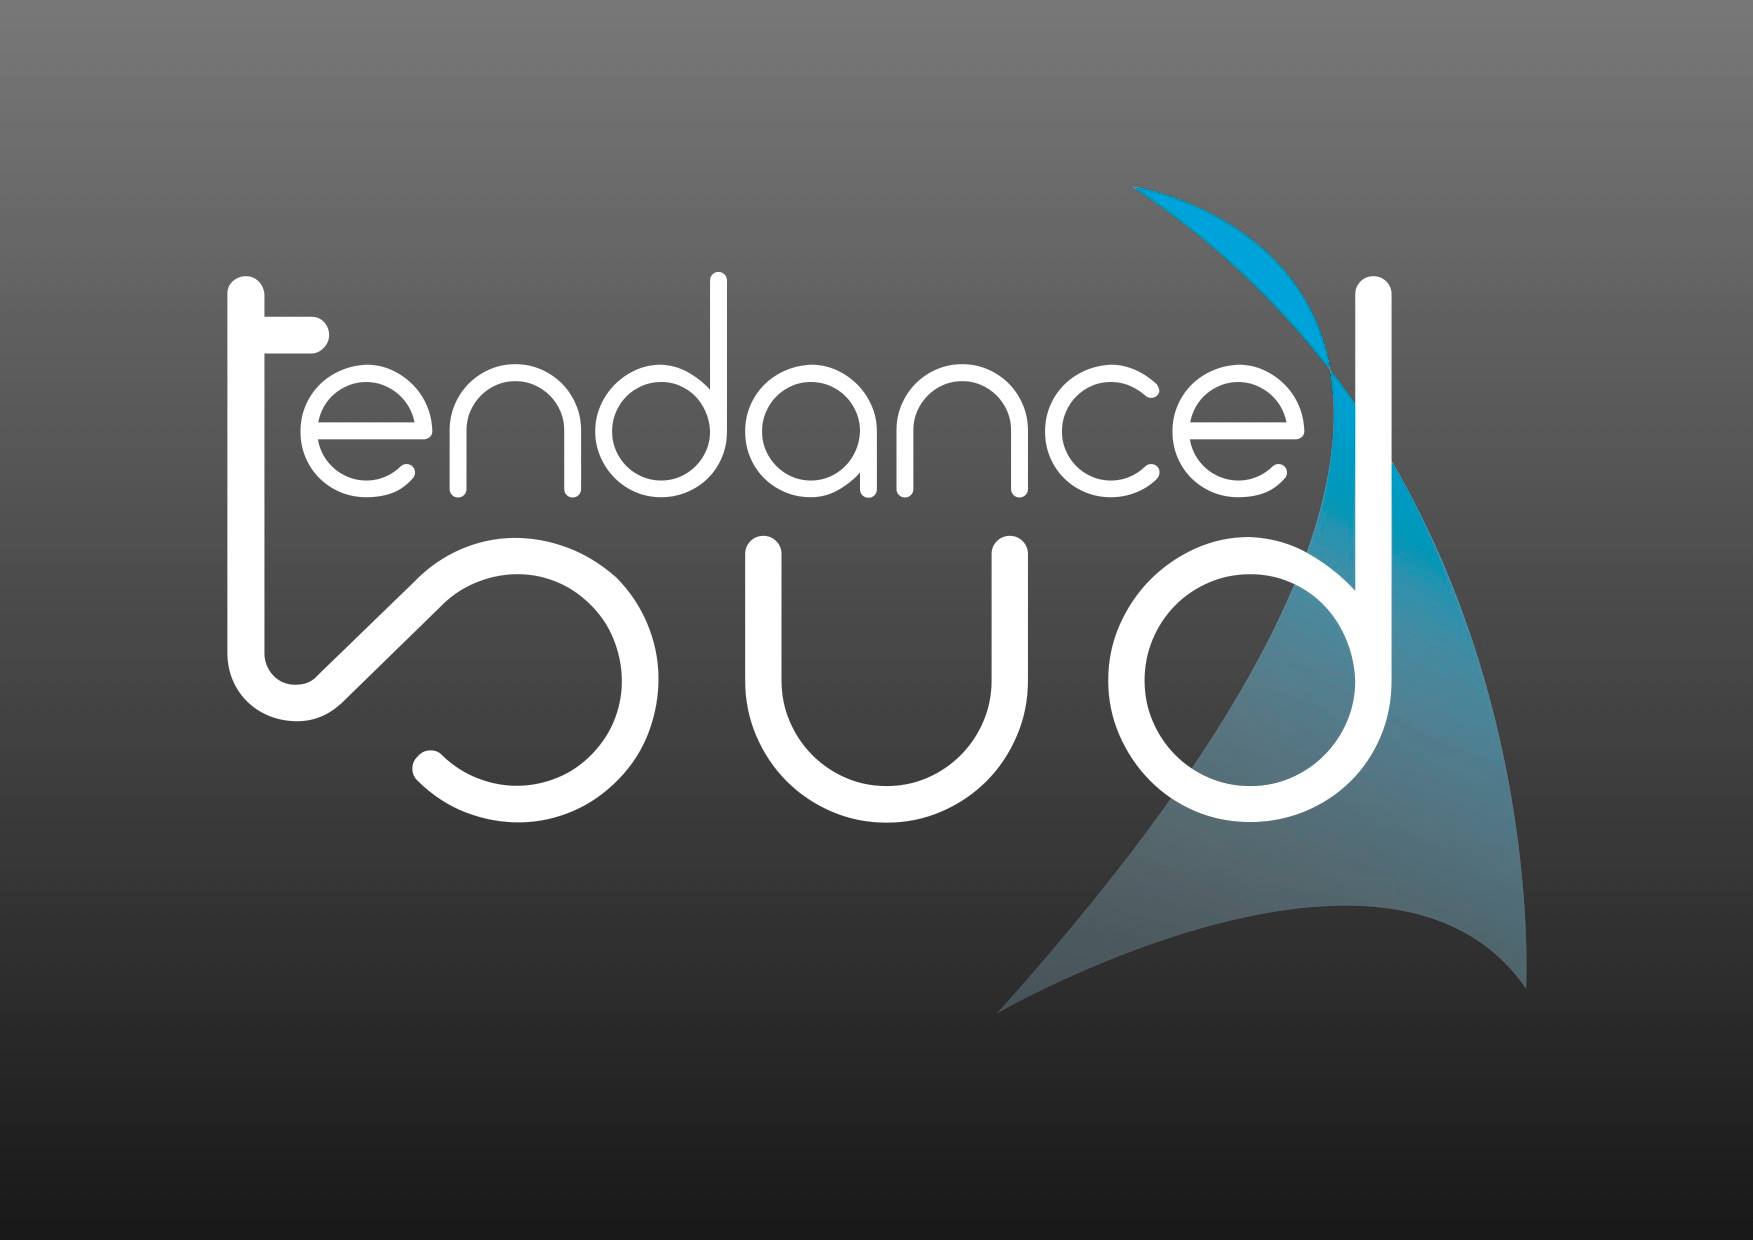 Tendance Sud